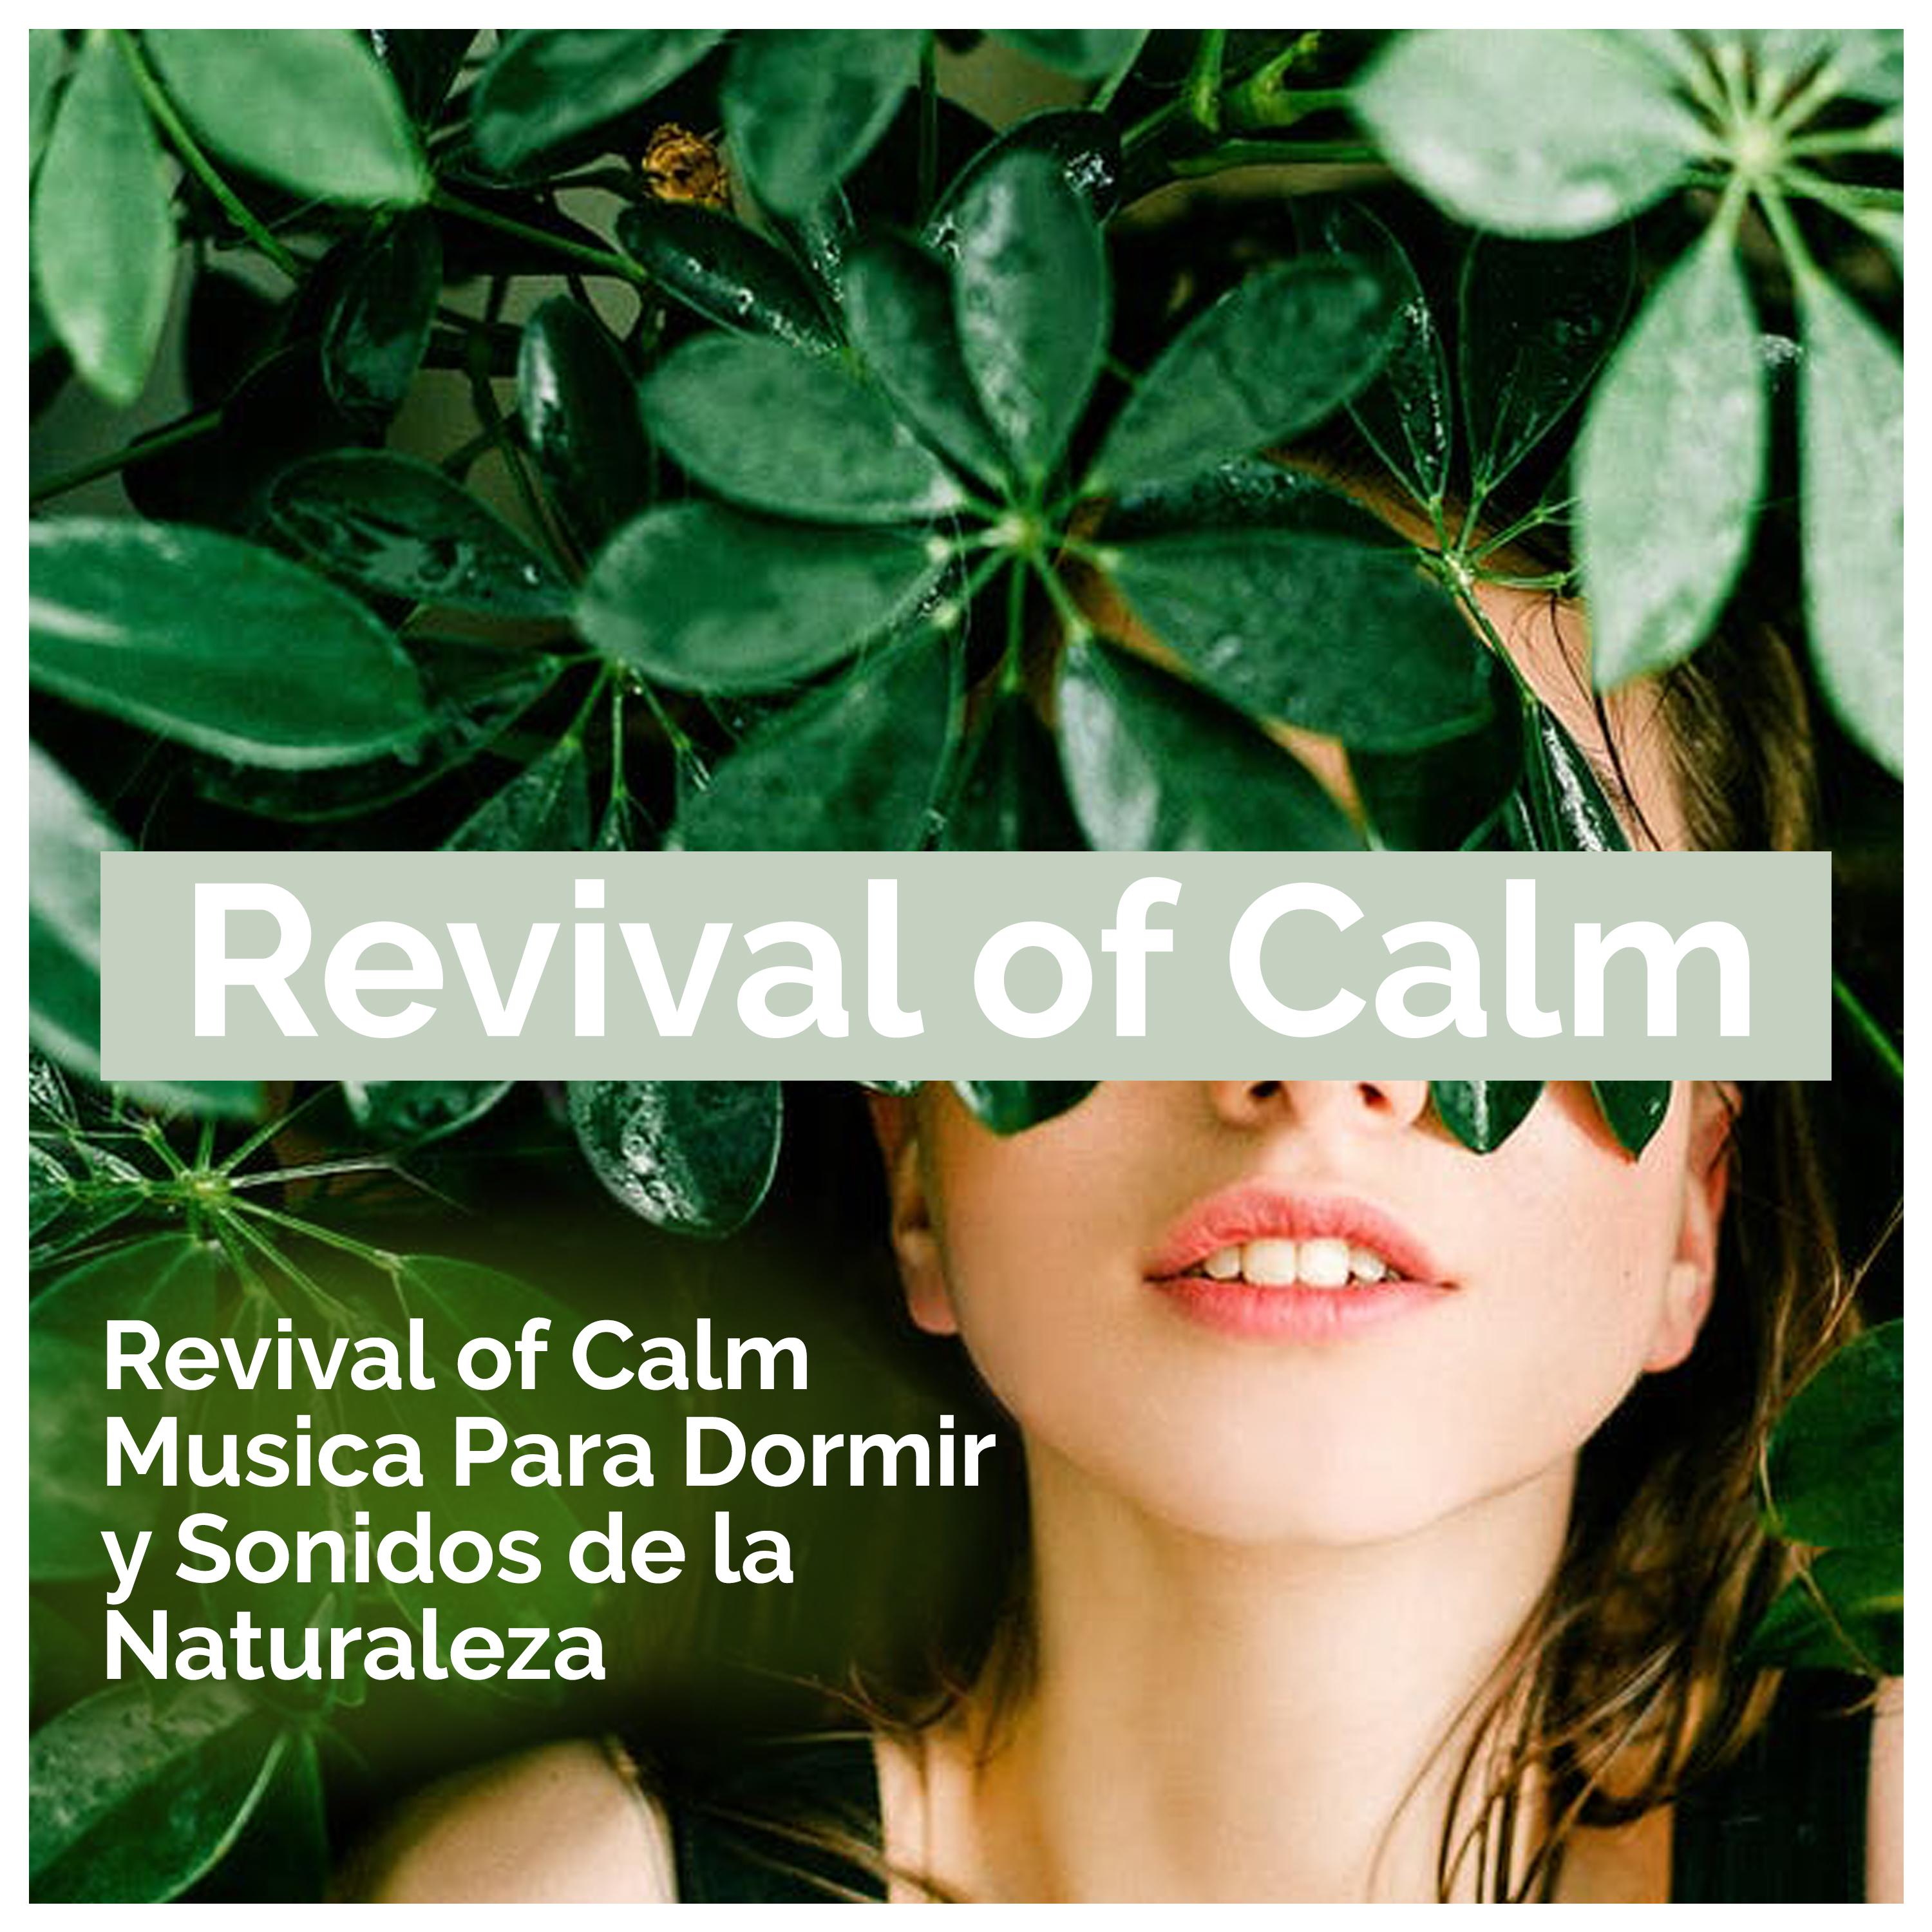 Revival of Calm